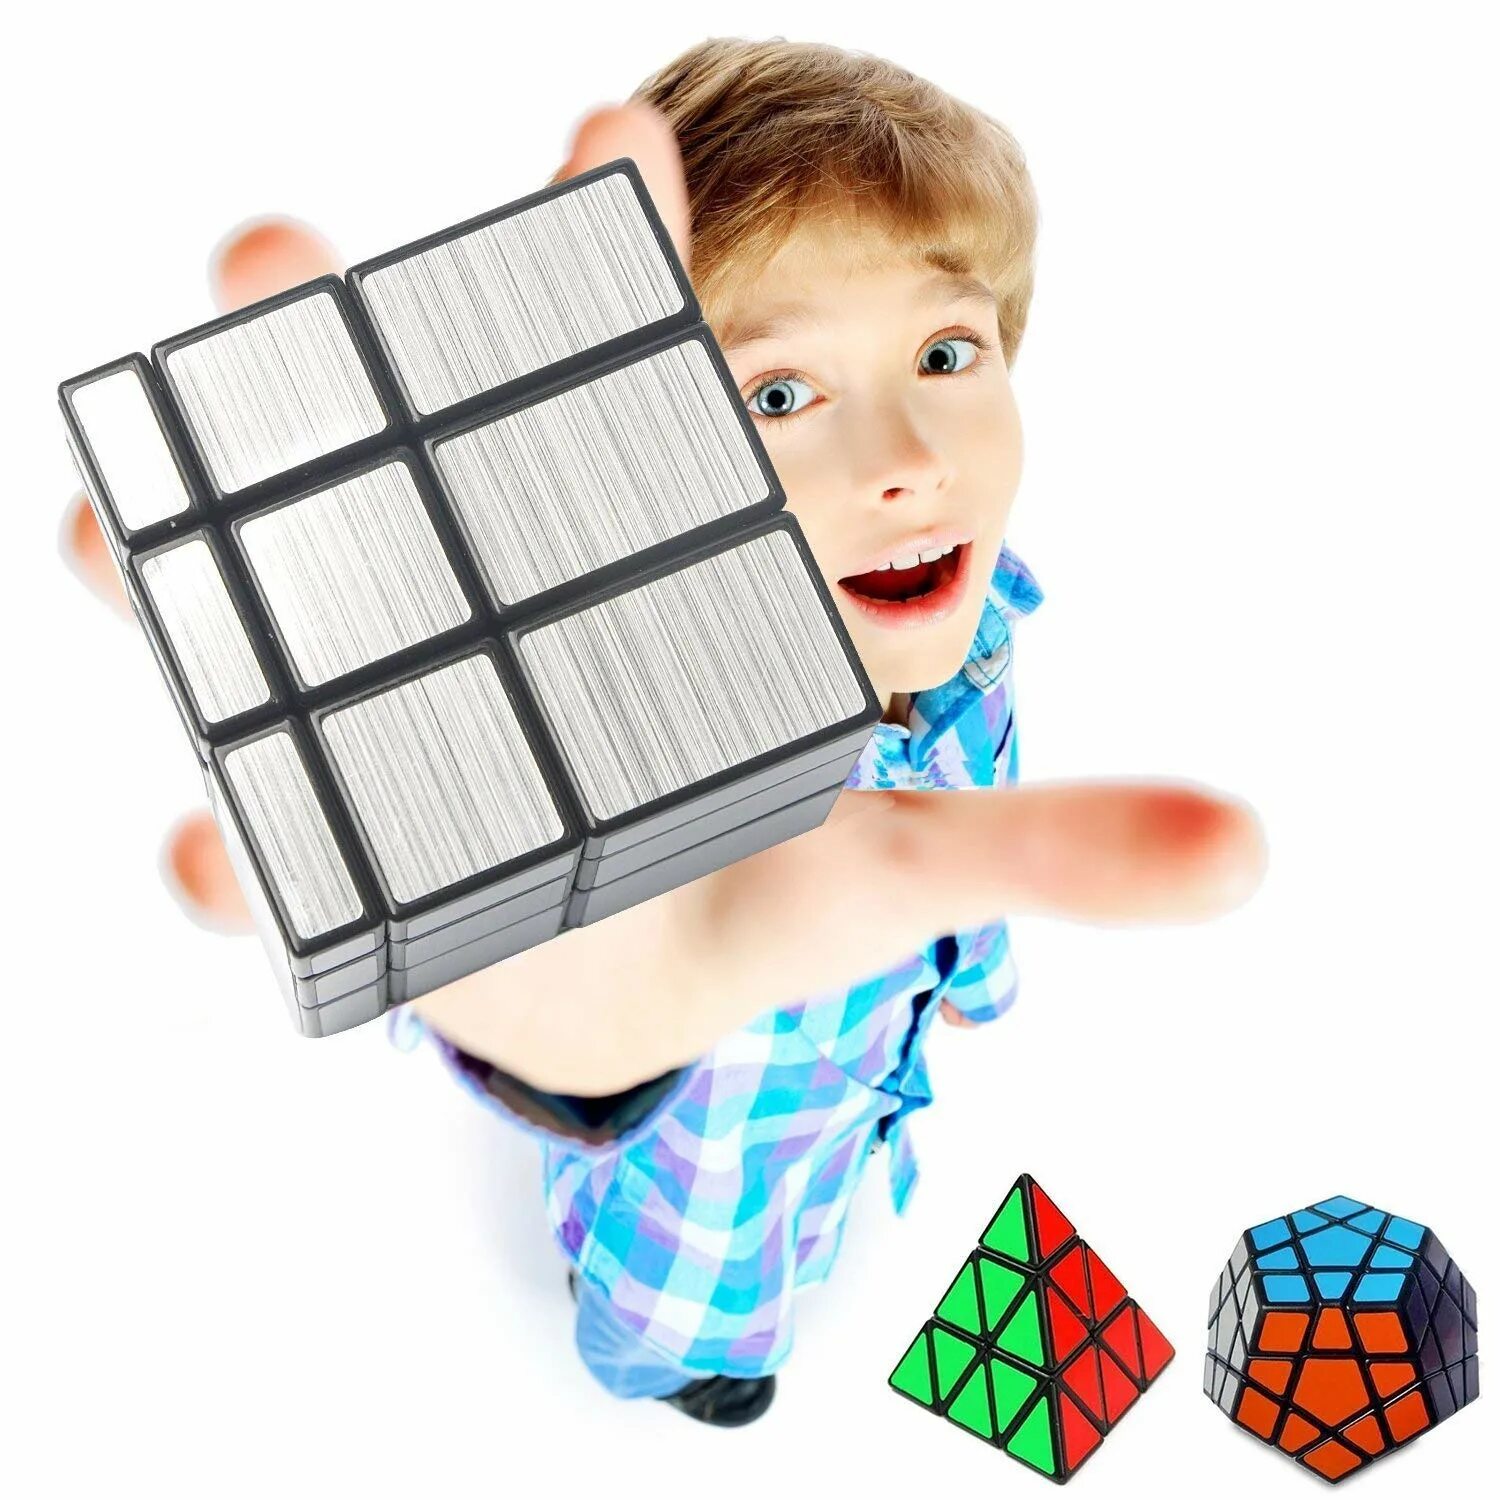 Кубик Рубика. Малыш с кубиком Рубика. Кубики рубики. Детская головоломка кубик. Включи кубики есть